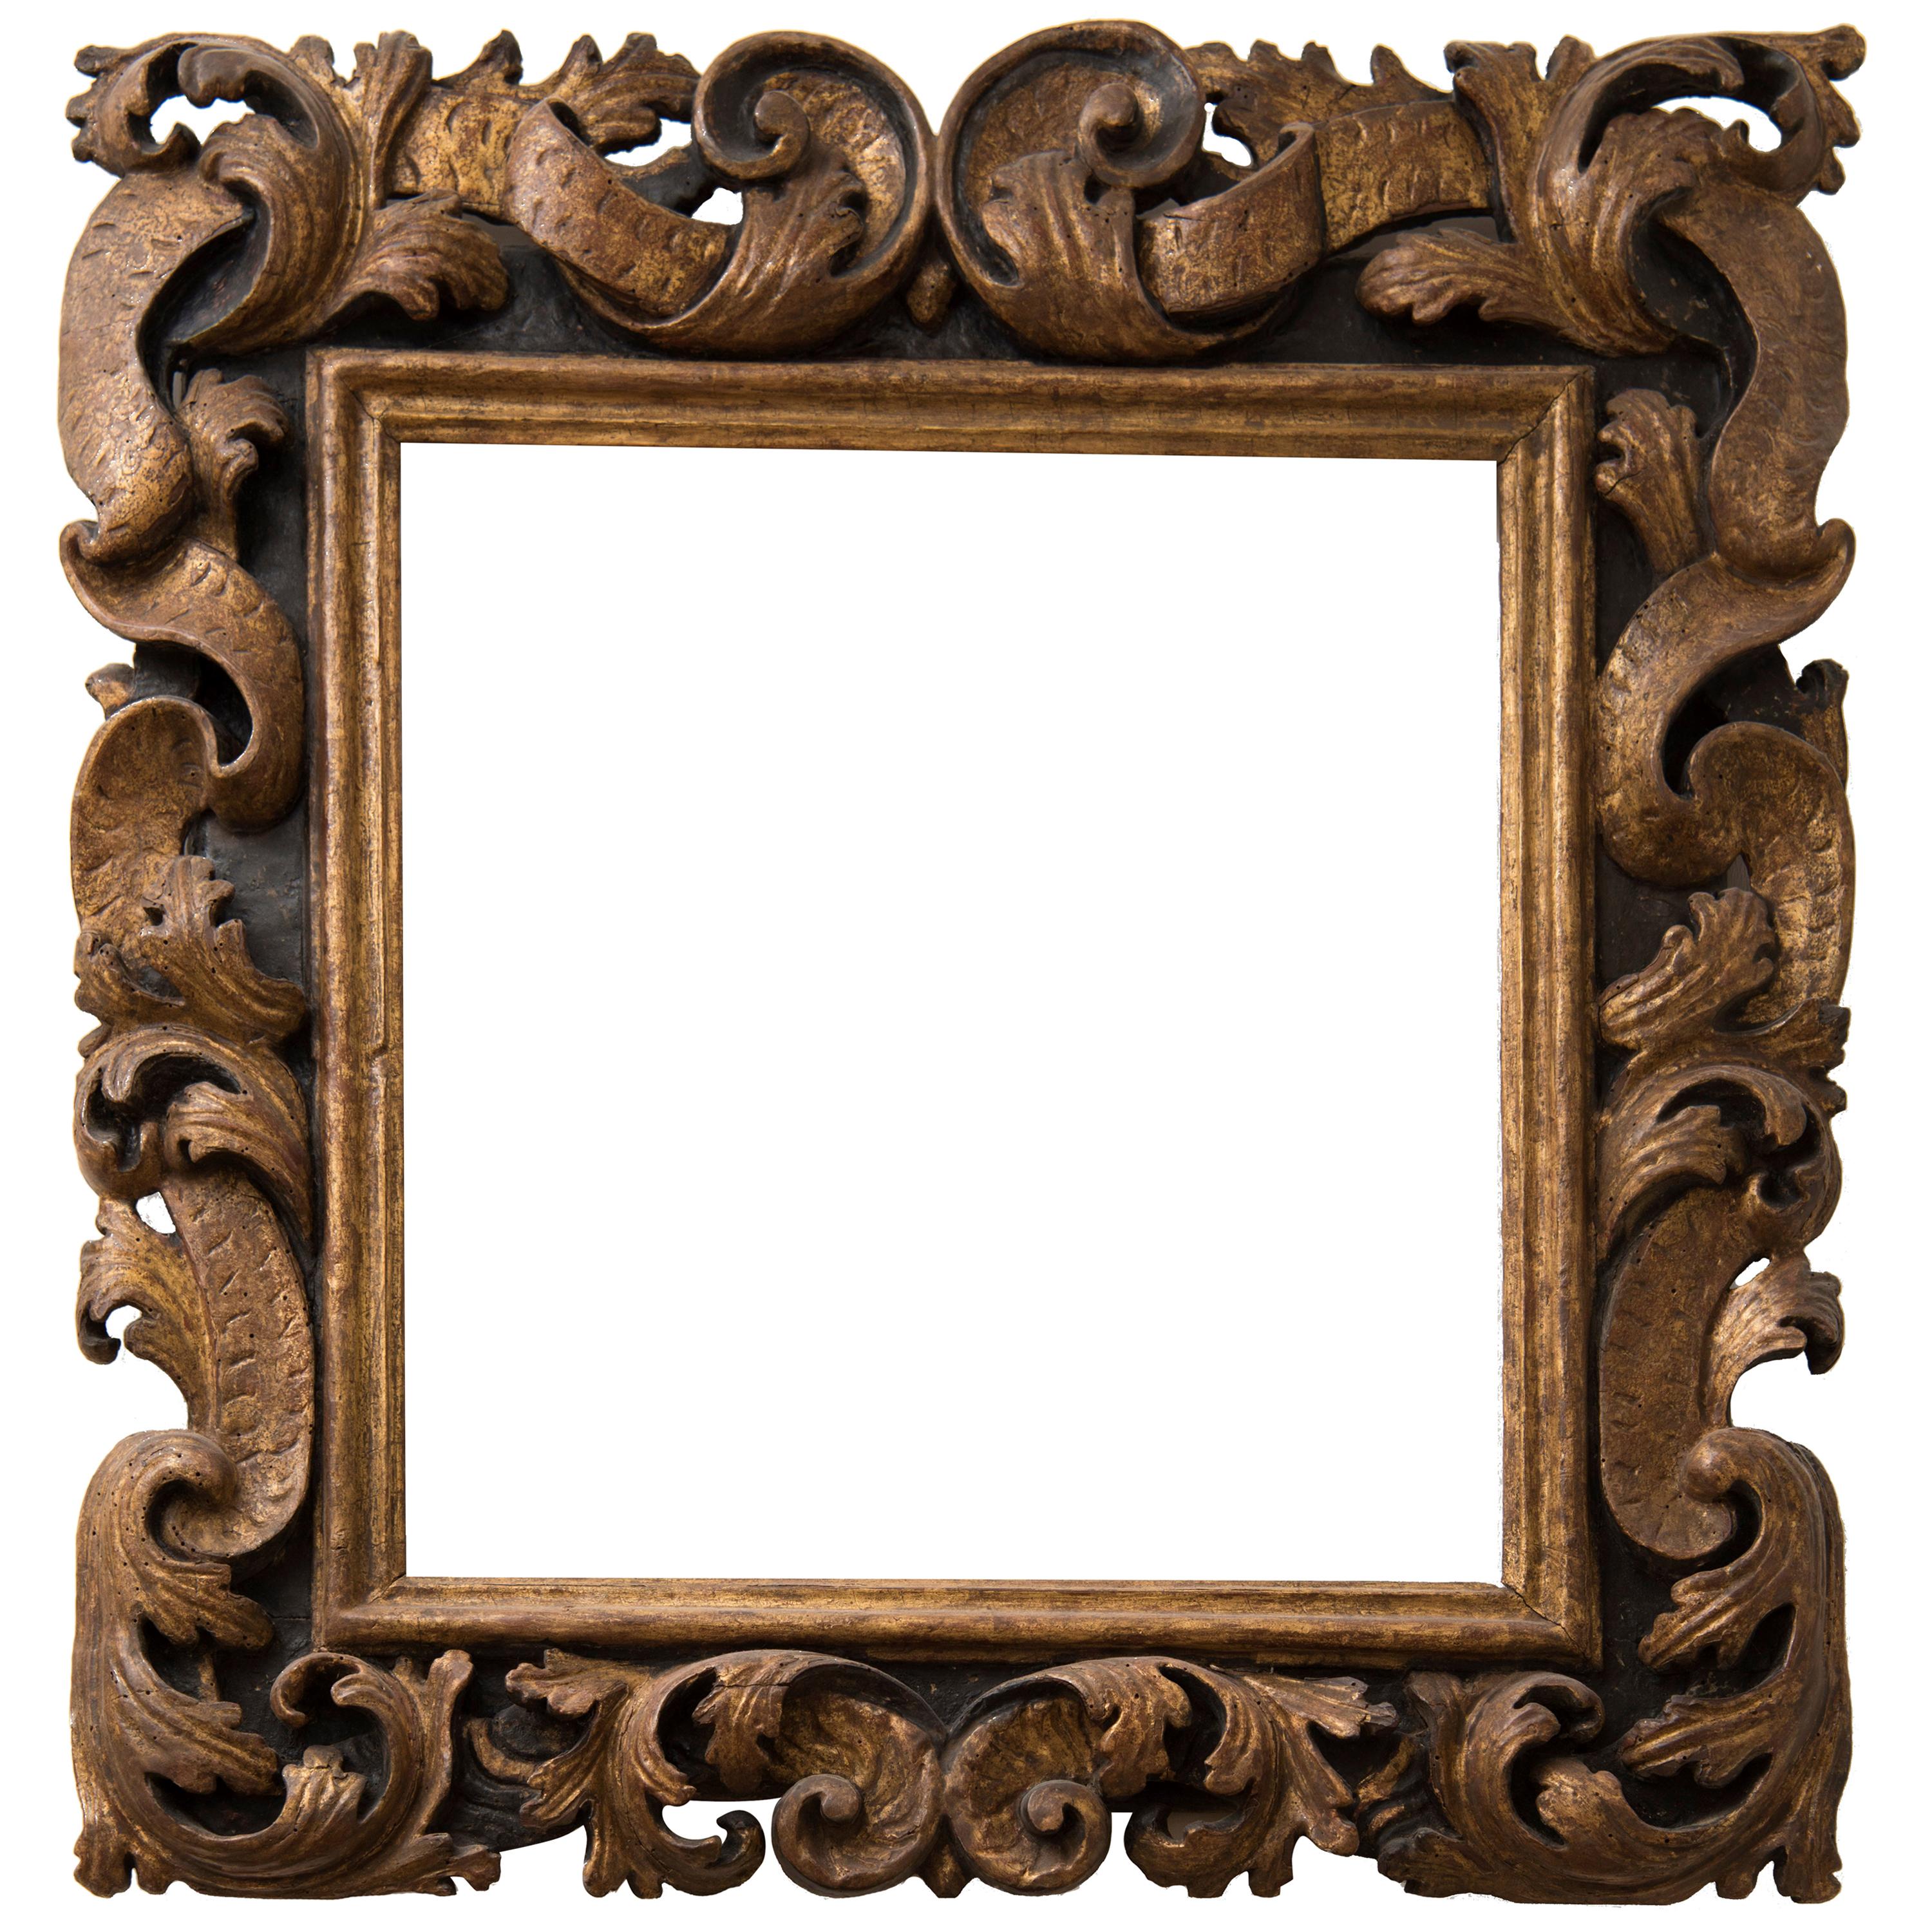 Original Ancient "Sansovino" Wood Frame, 17th Century